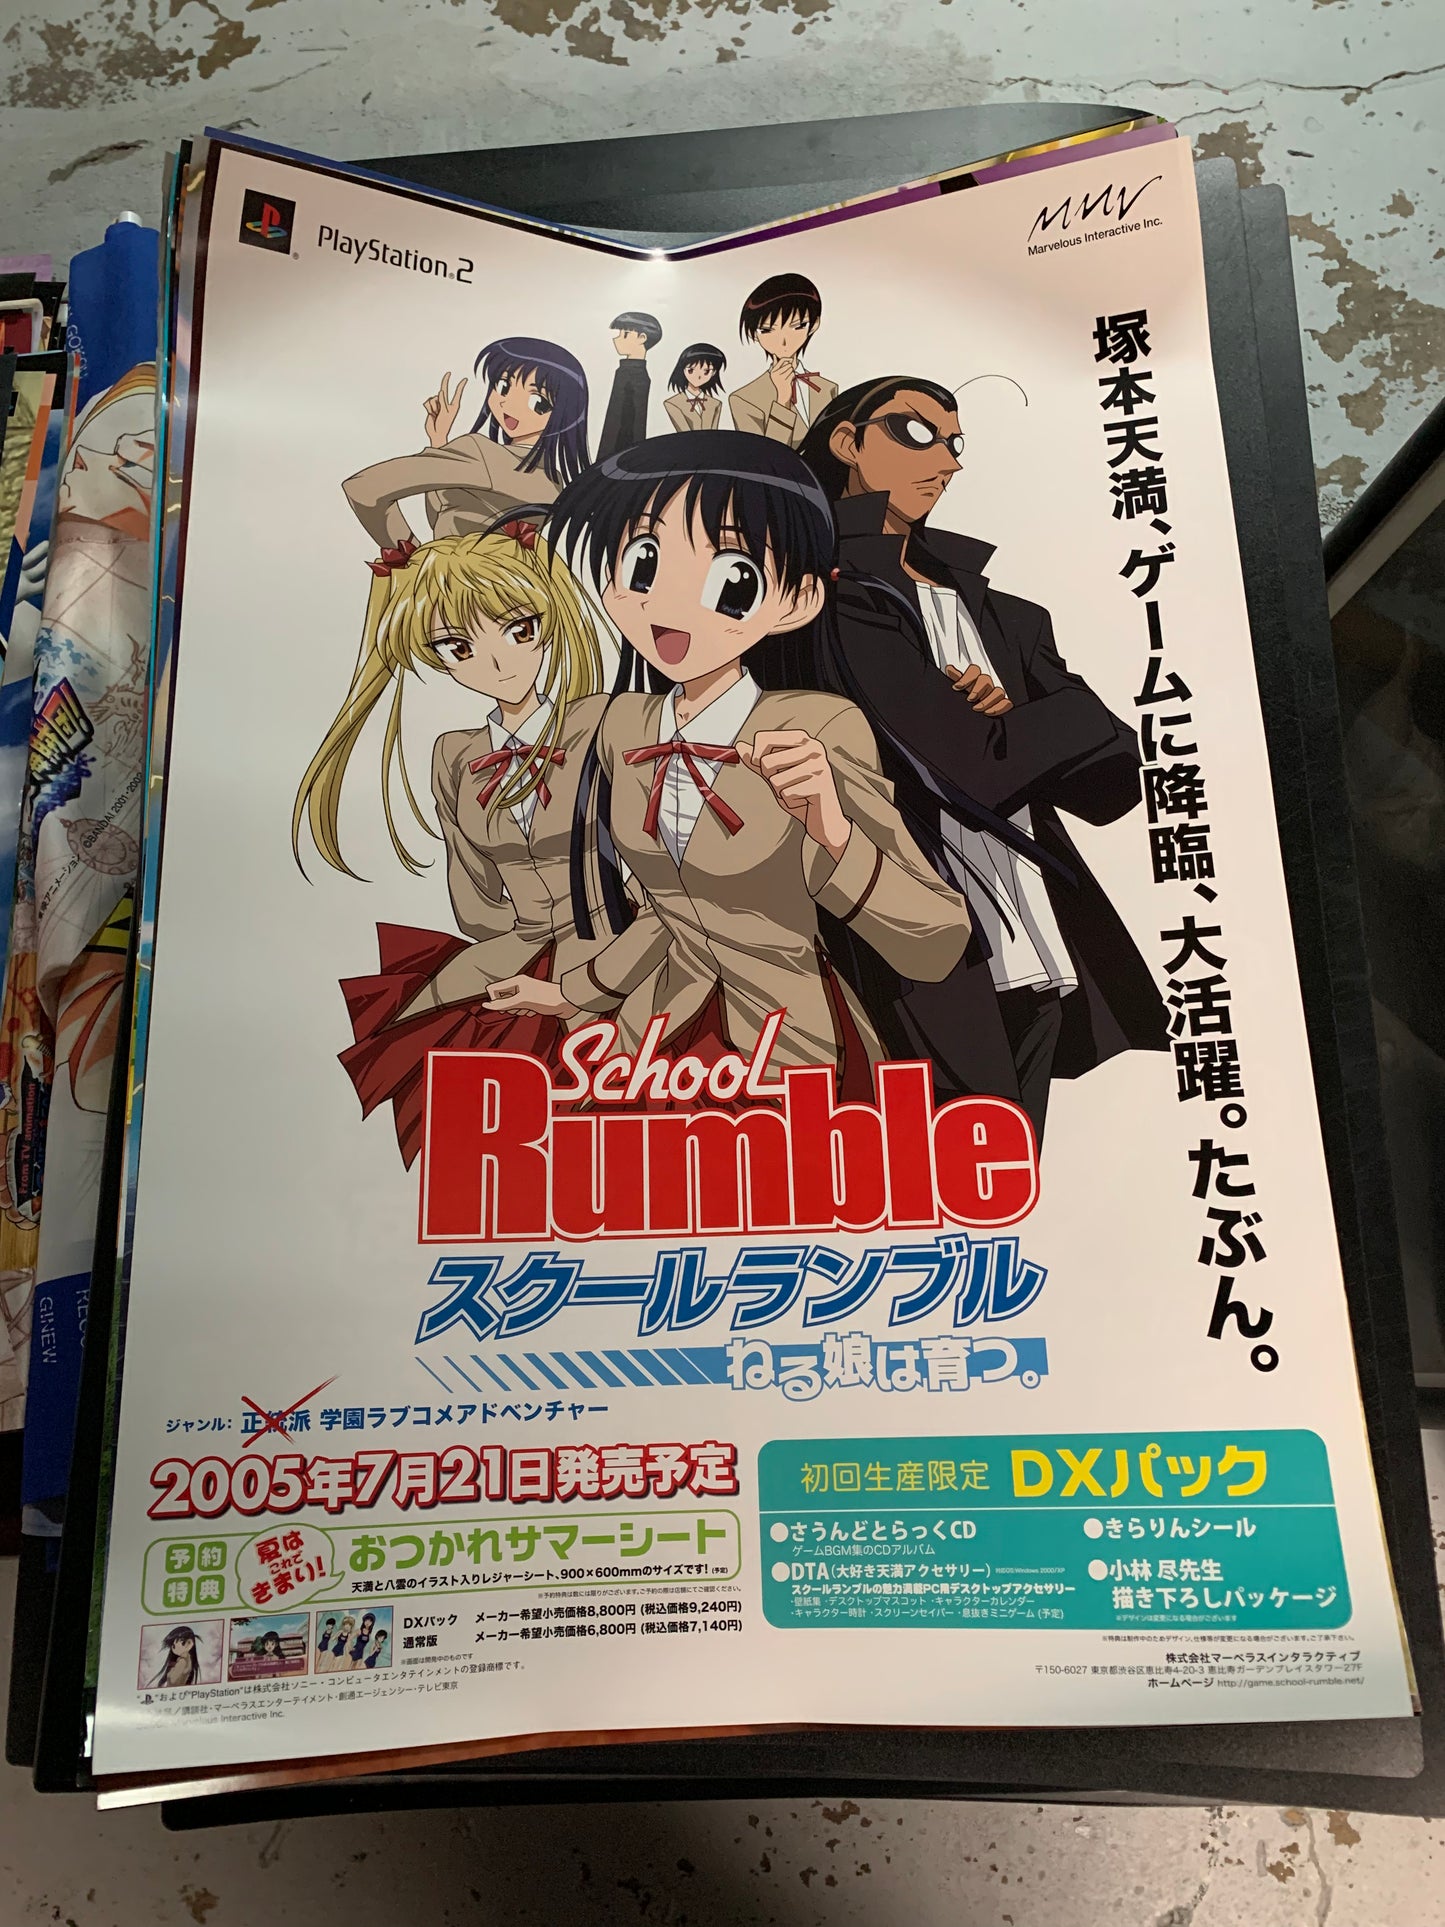 School Rumble PS2 2005 B2 Poster (Set of 2)